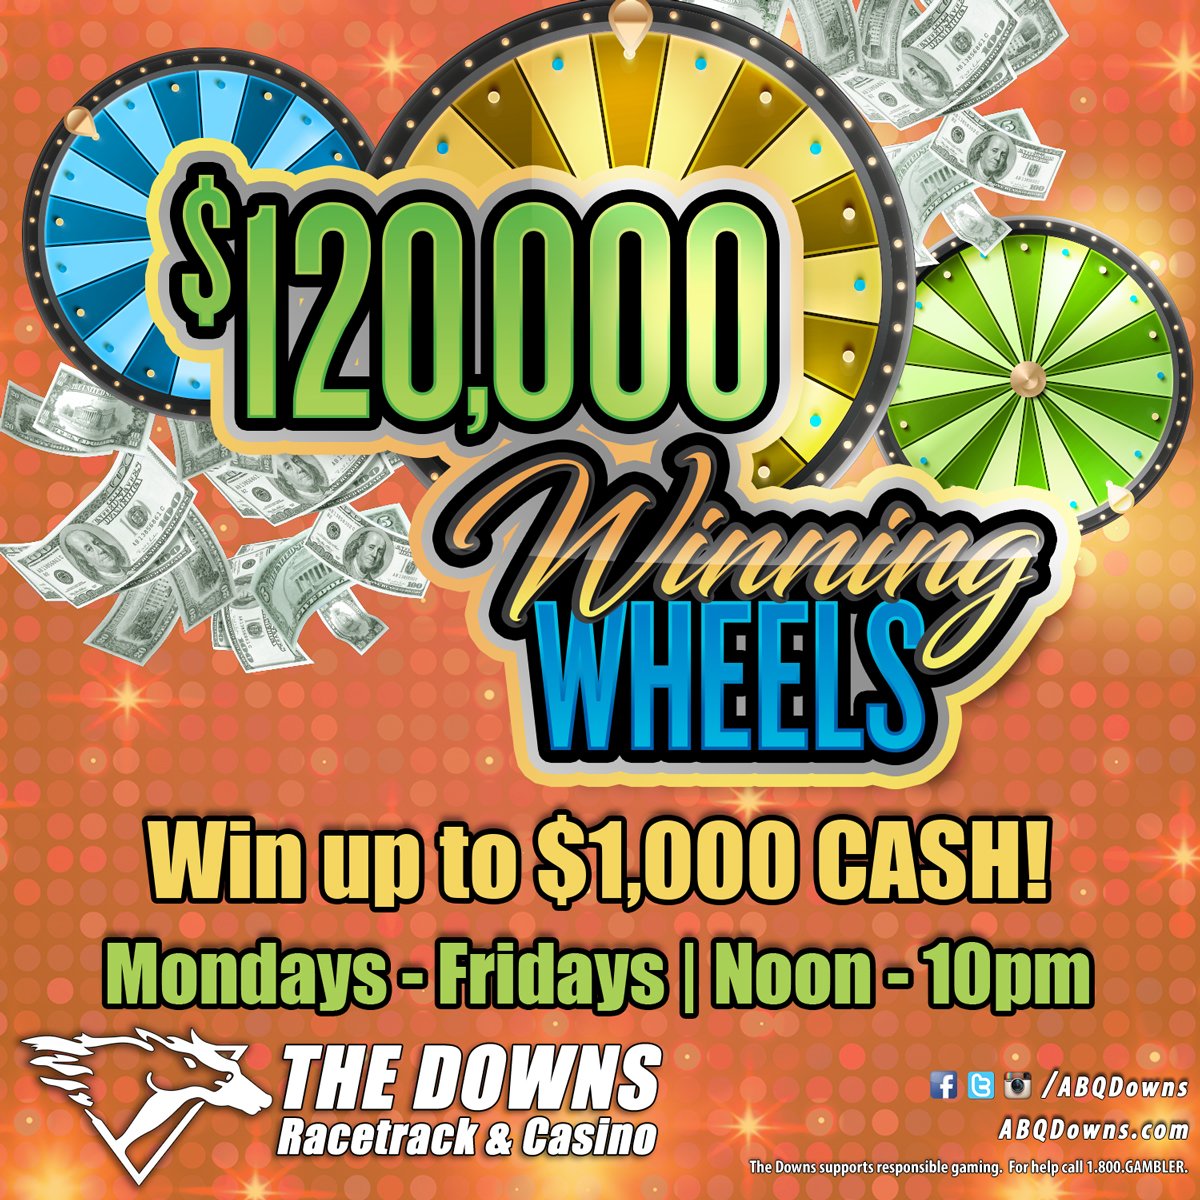 The Downs $125,000 #WinningWheels spin again at noon! #ABQDowns #Casino #Albuquerque #Winning